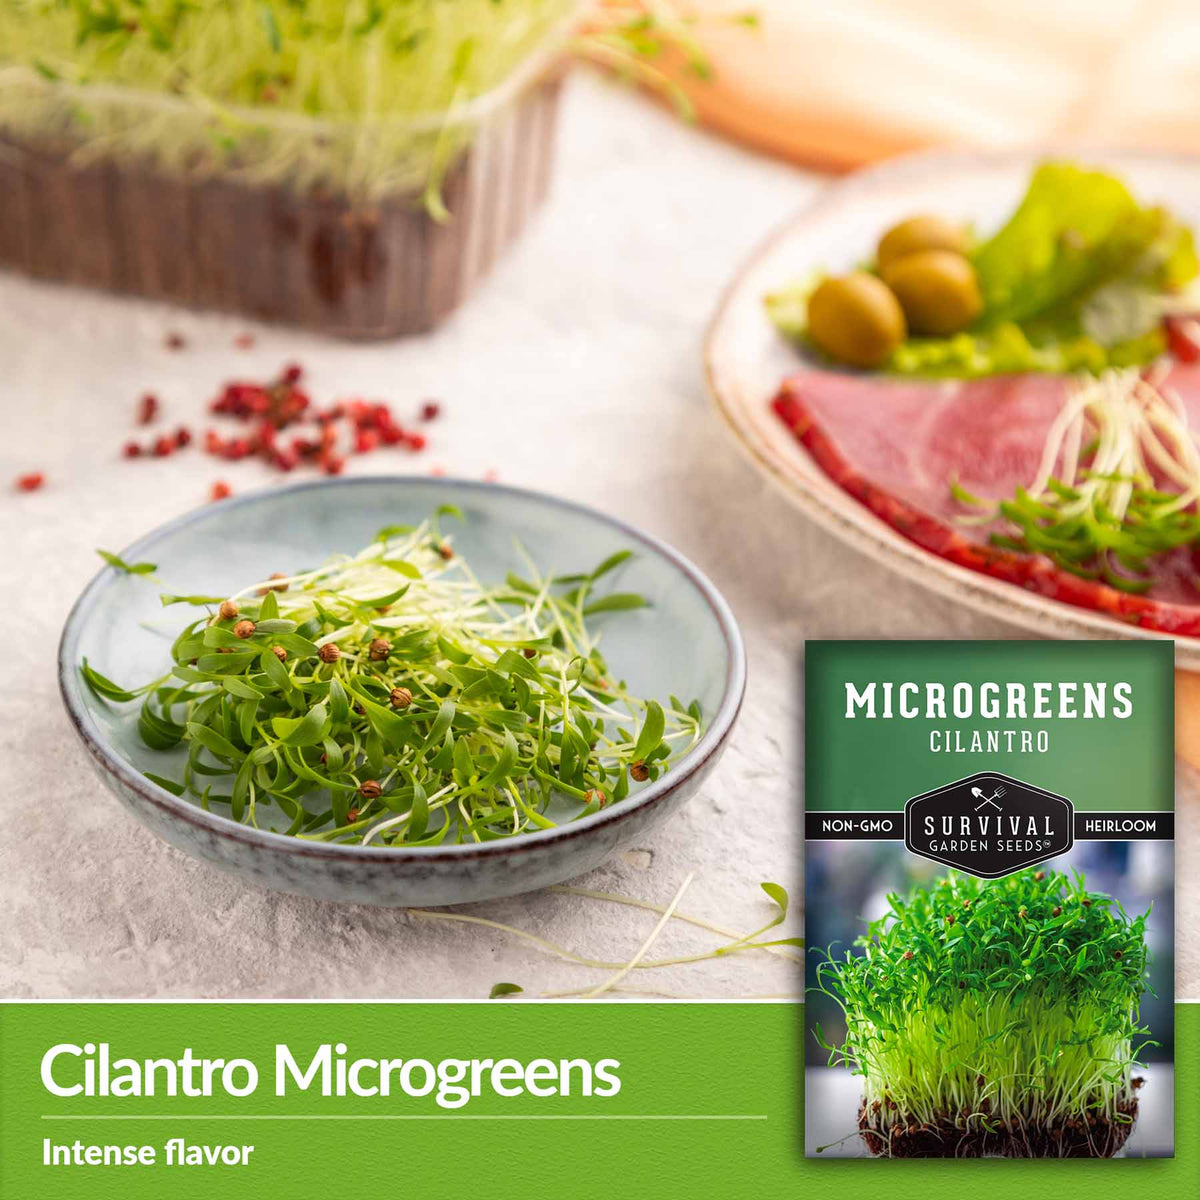 cilantro microgreens - intense flavor